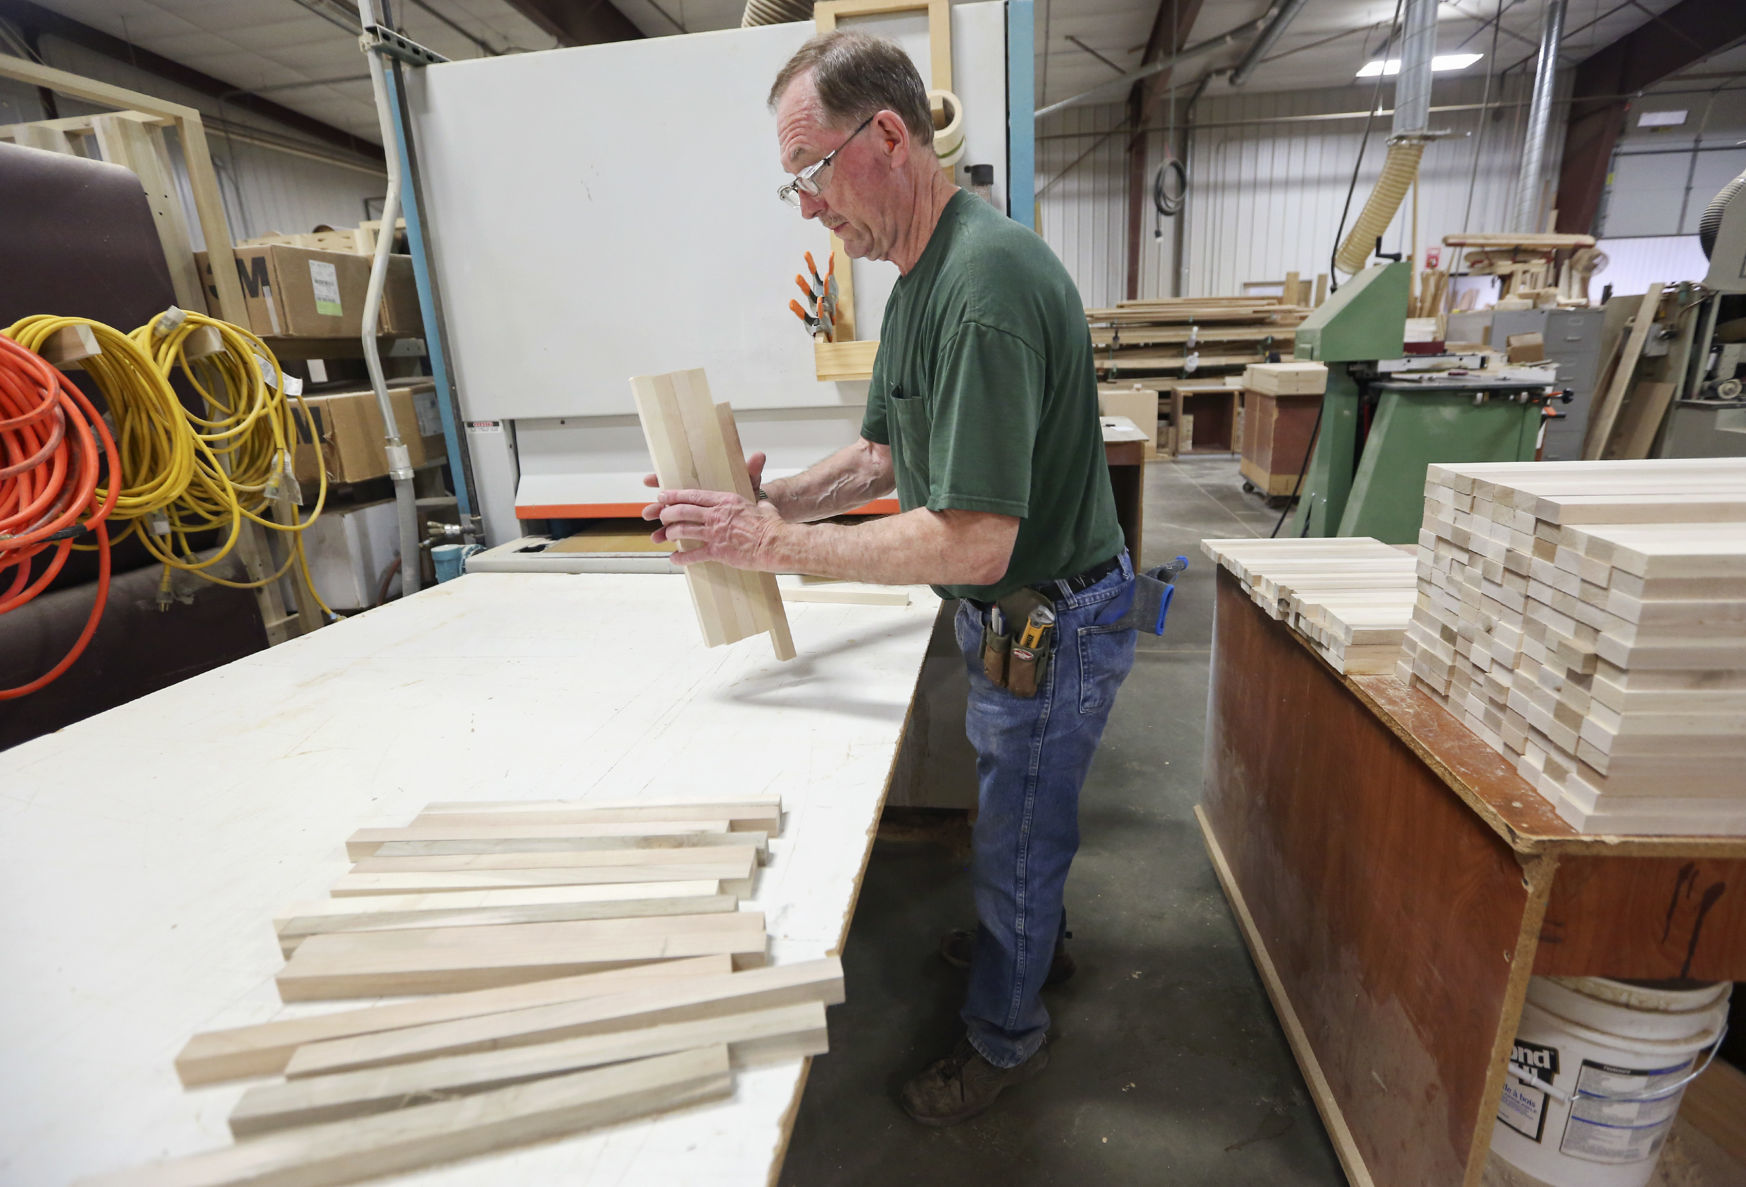 Ken Willenborg works at Heritage Wood Products in Worthington, Iowa, on Thursday, May 16, 2019.    PHOTO CREDIT: NICKI KOHL